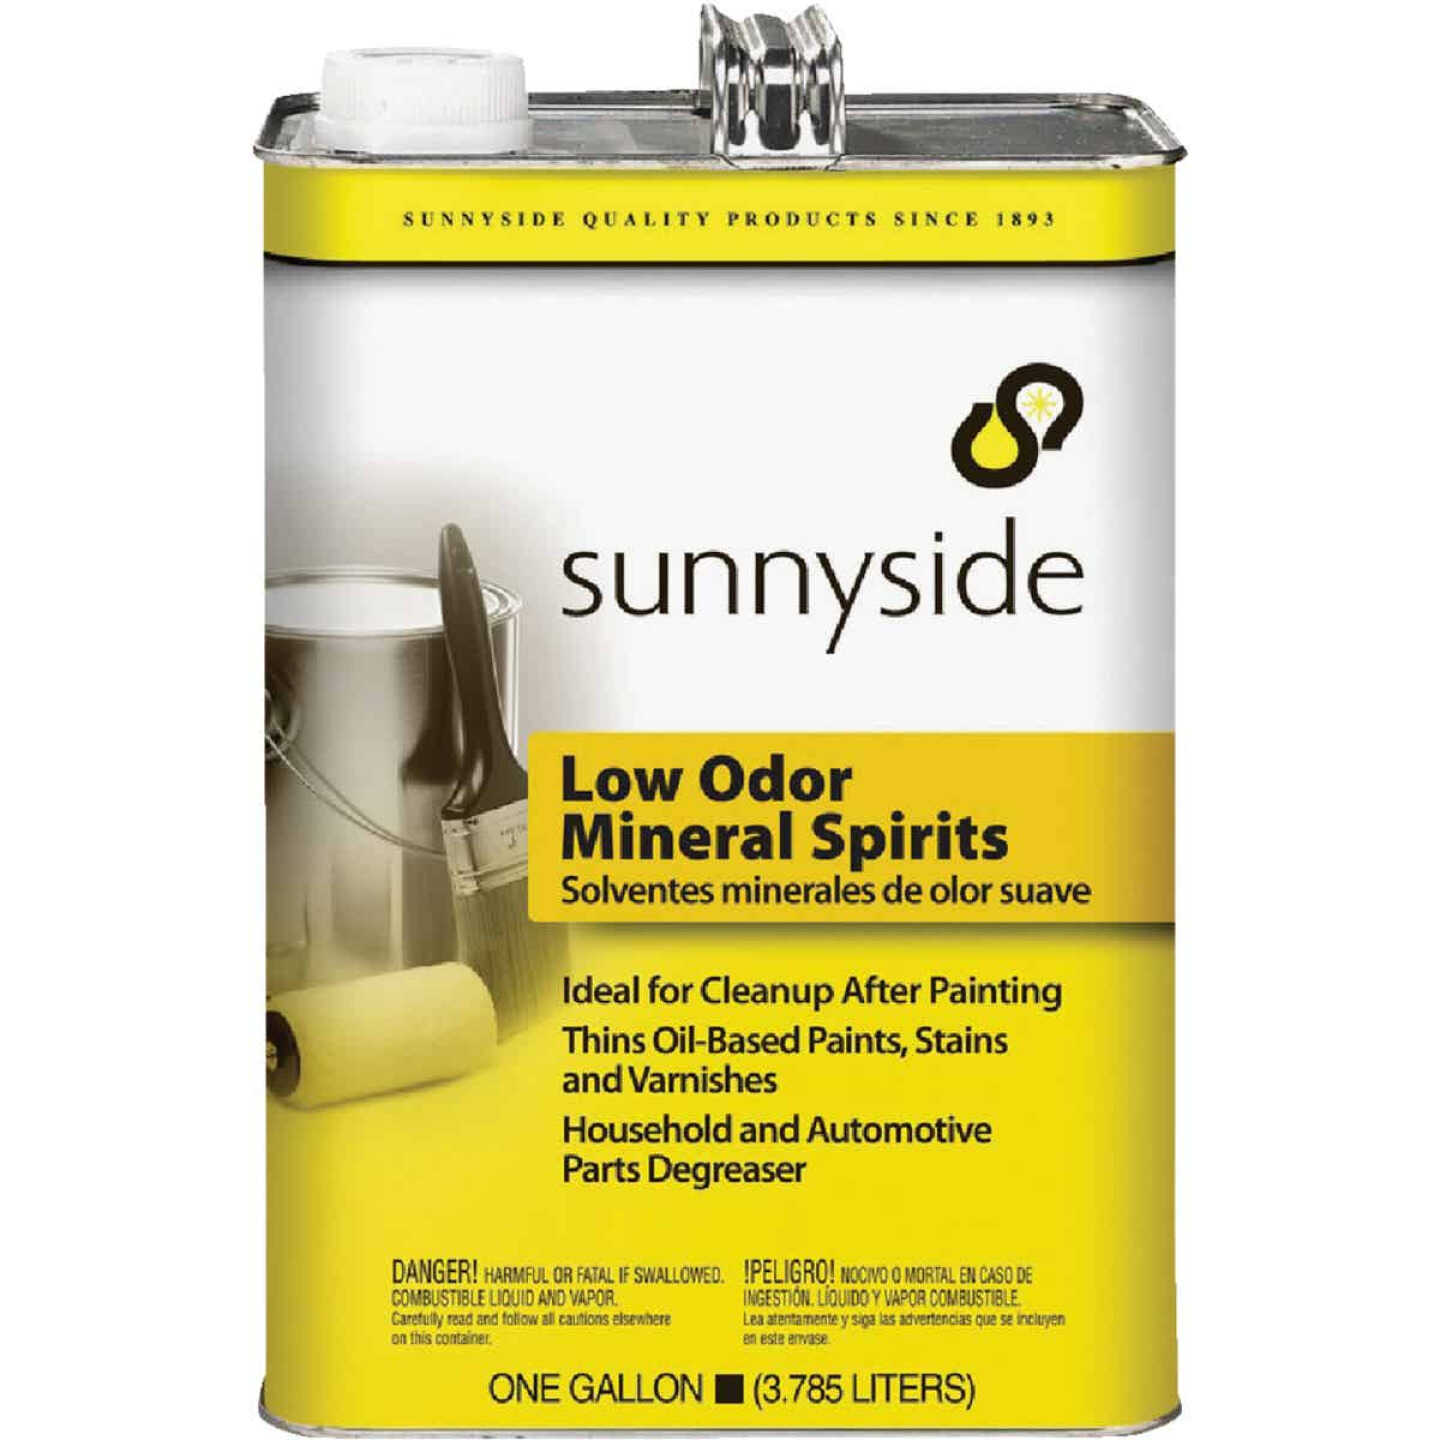 Sunnyside 1 Gallon Paint Thinner, Plastic Can - Power Townsend Company